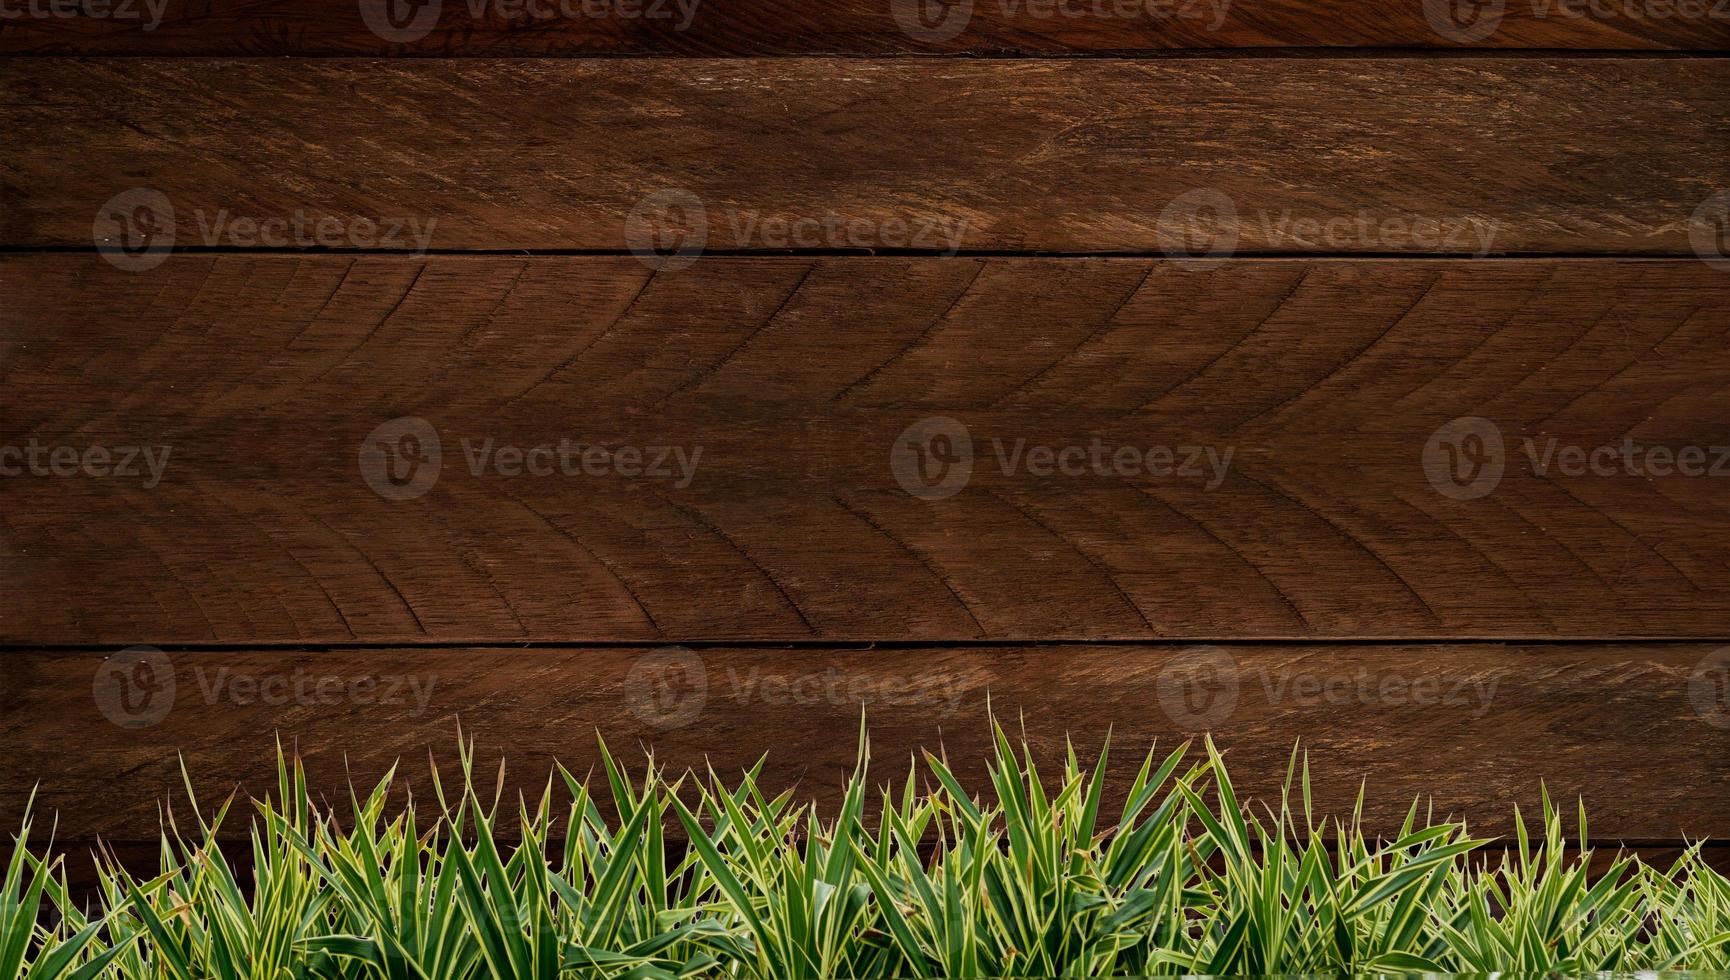 verse lente groen gras en blad plant over houten hek achtergrond. hout achtergrond gras frame foto